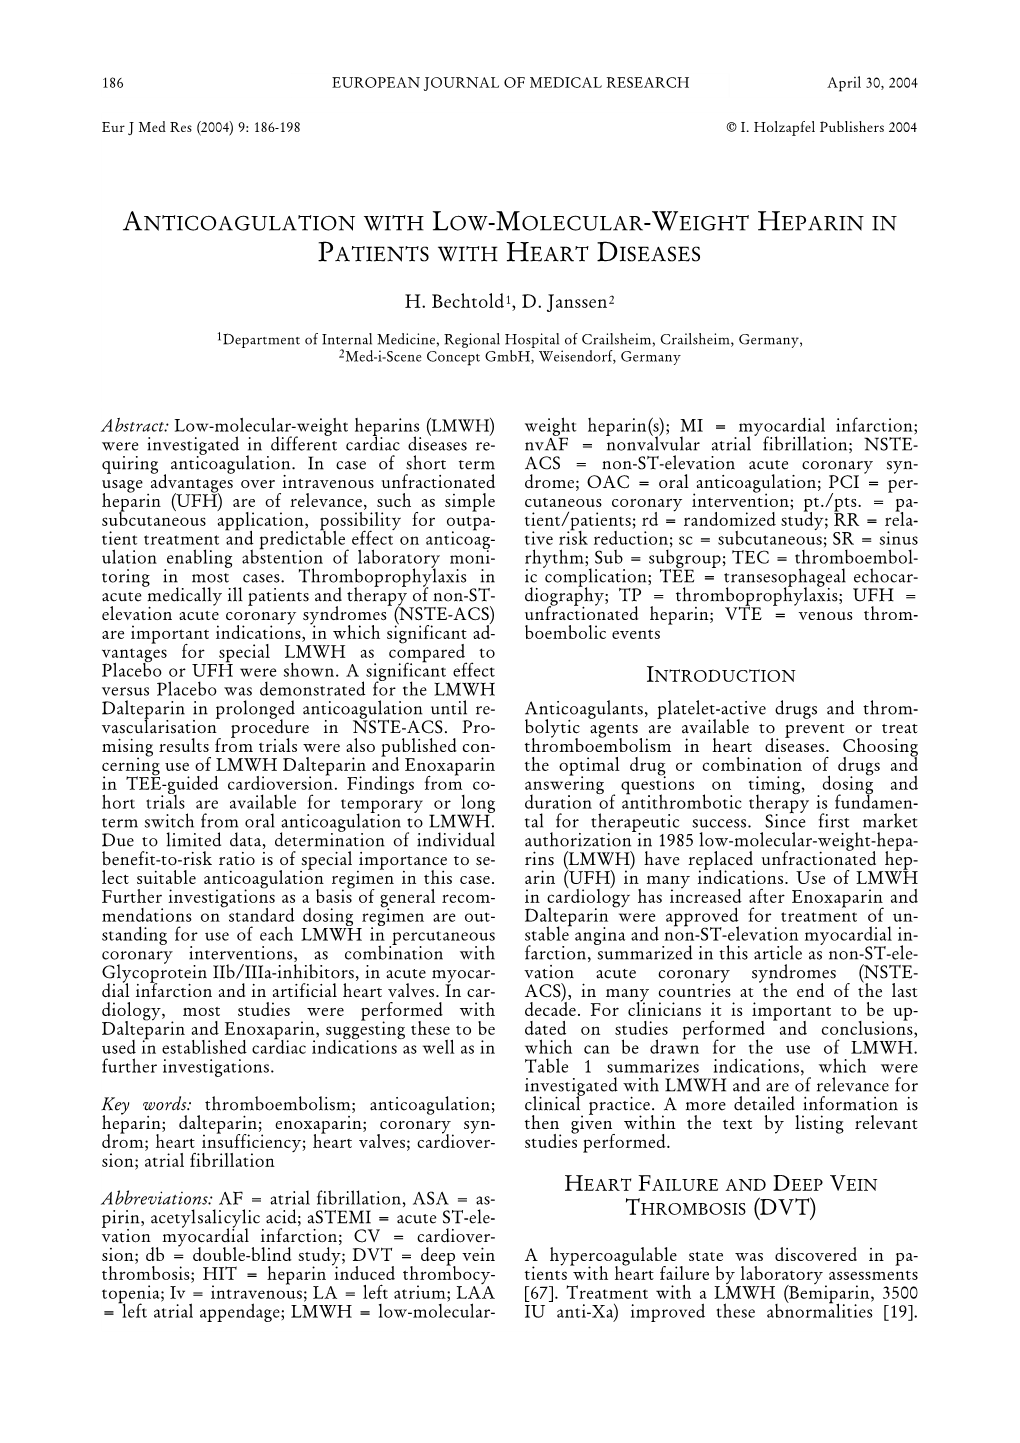 Anticoagulation with Low-Molecular-Weight Heparin in Patients with Heart Diseases